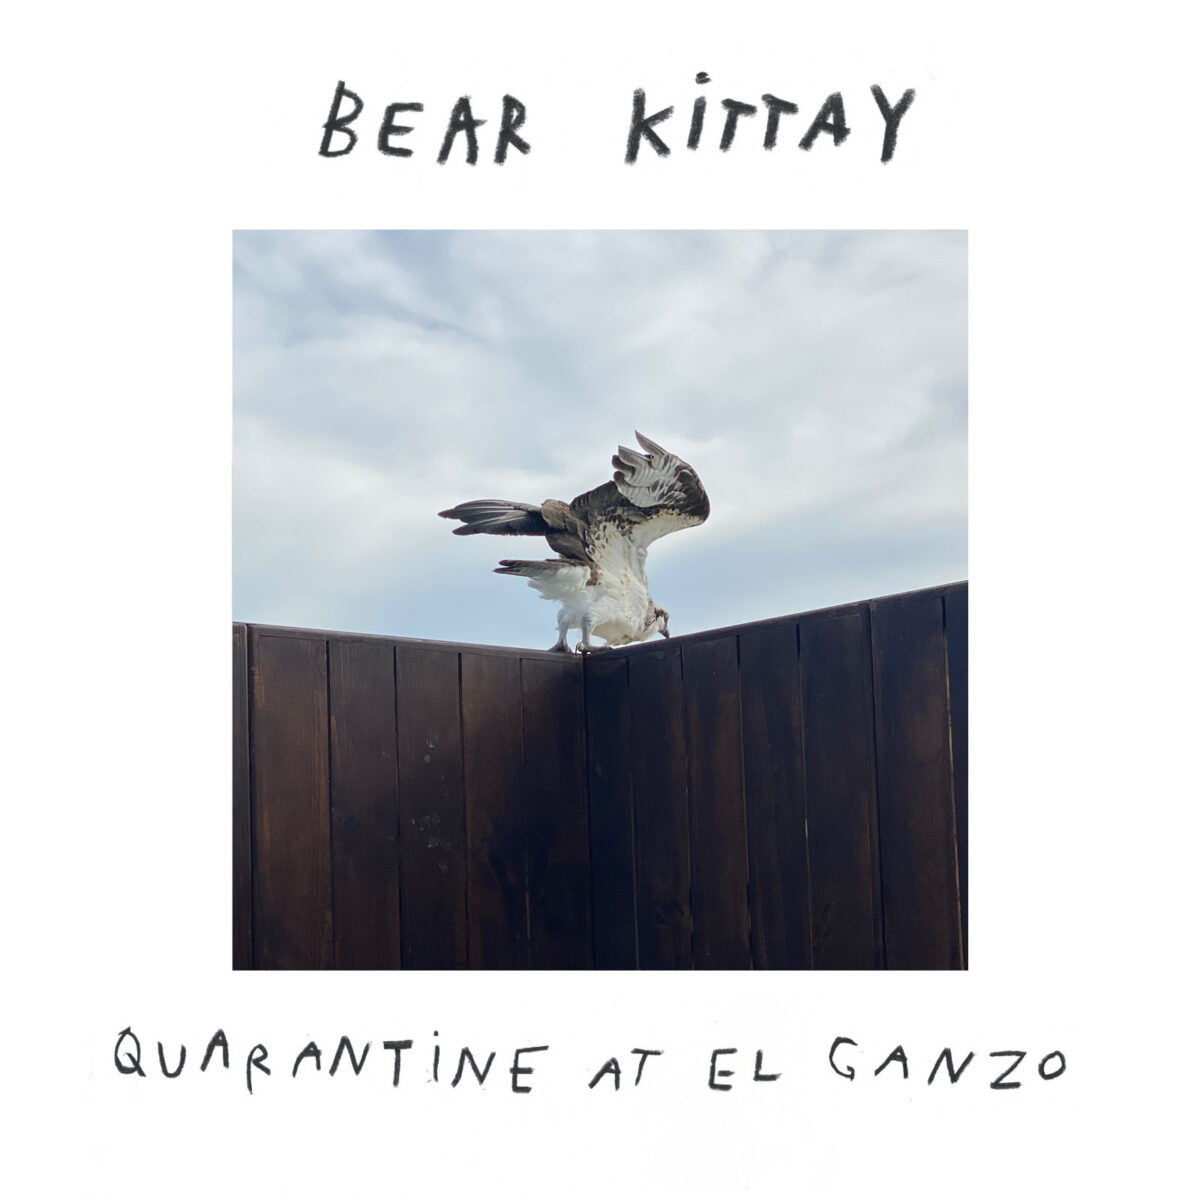 bear kittay llega con quarantine at el ganzo volume two unnamed 11